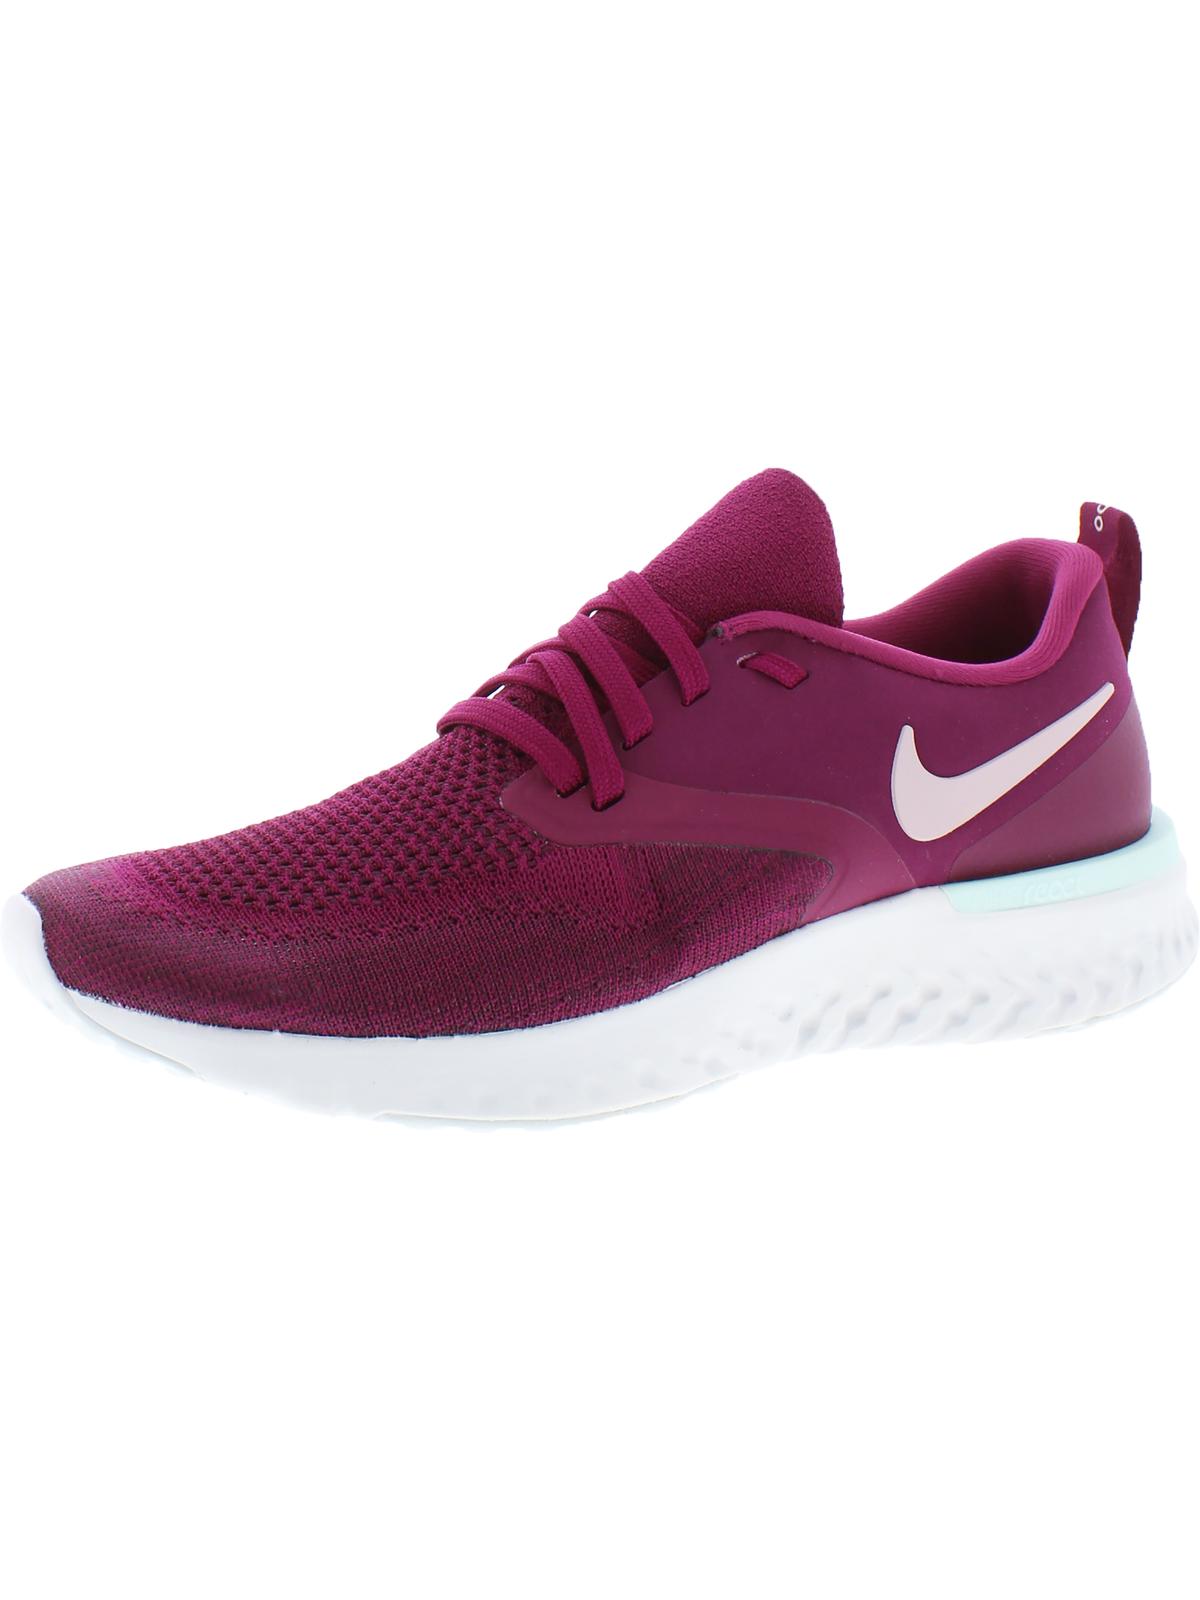 Nike Womens Odyssey React 2 Flyknit Fitness Running Shoes Purple 9 Medium (B,M) - image 1 of 2